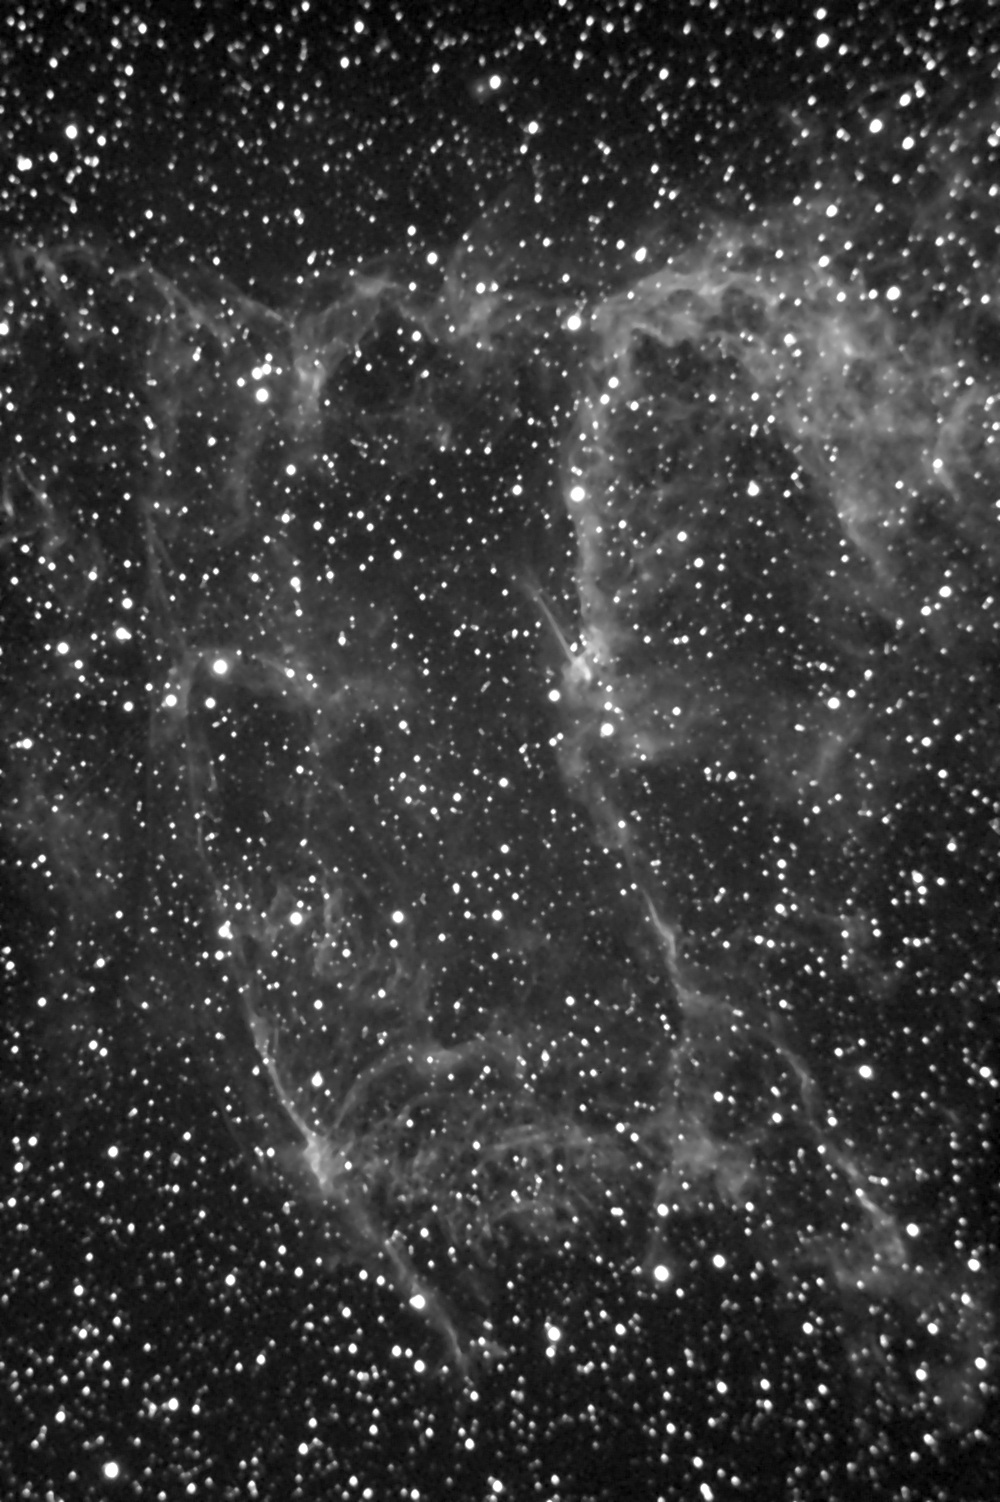 Veil Nebula Taken 9-7-15